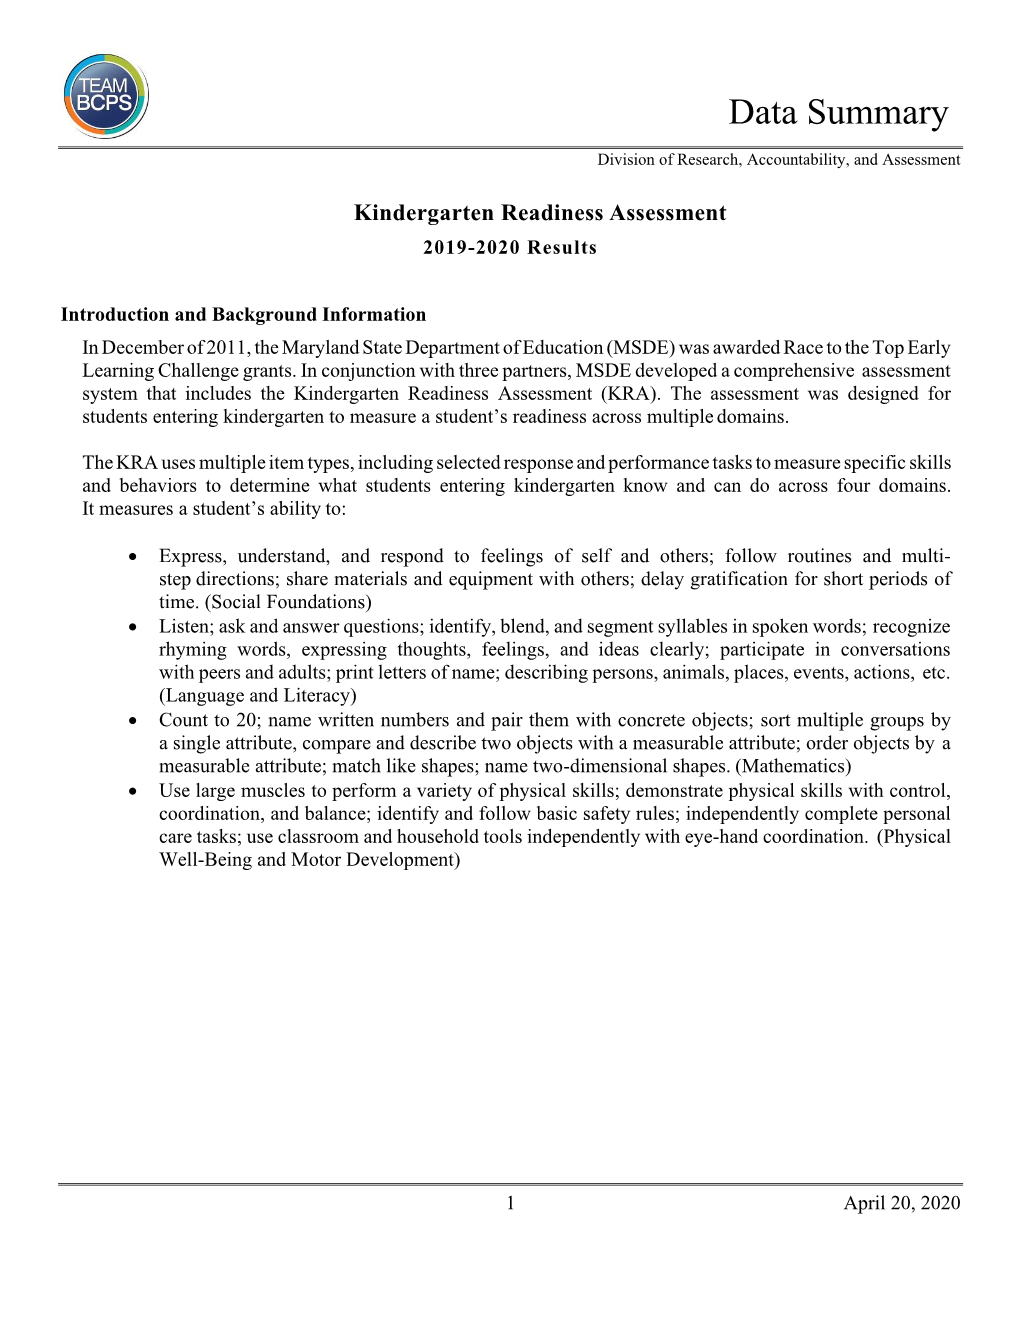 Kindergarten Readiness Assessment 2019 -2020 Results